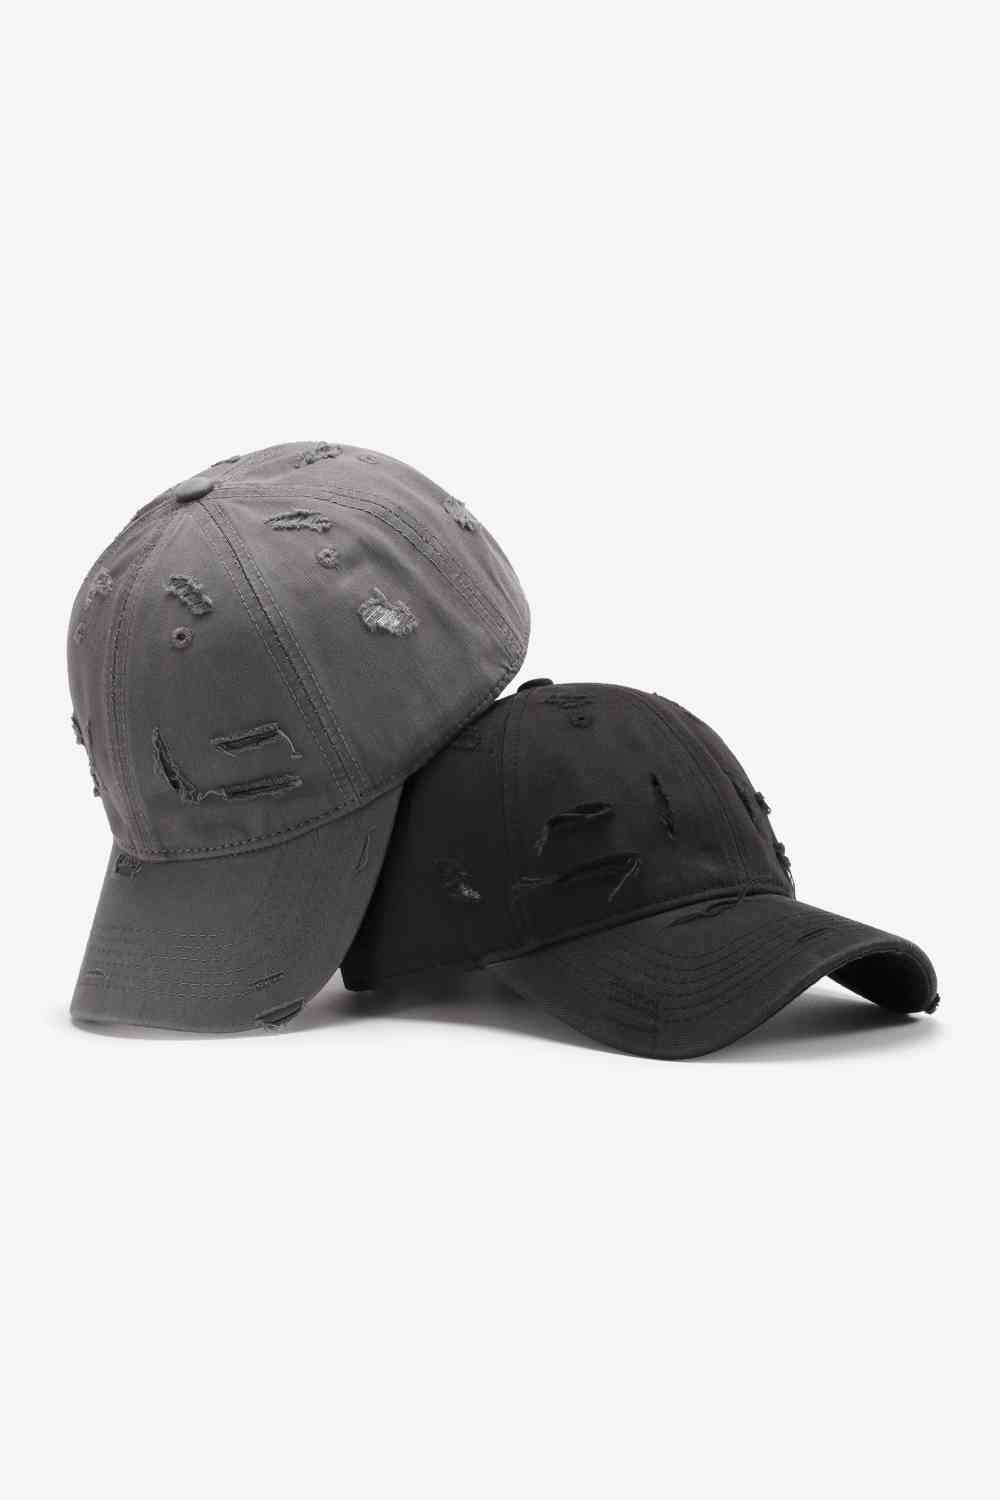 Dark Slate Gray Distressed Adjustable Baseball Cap Gifts